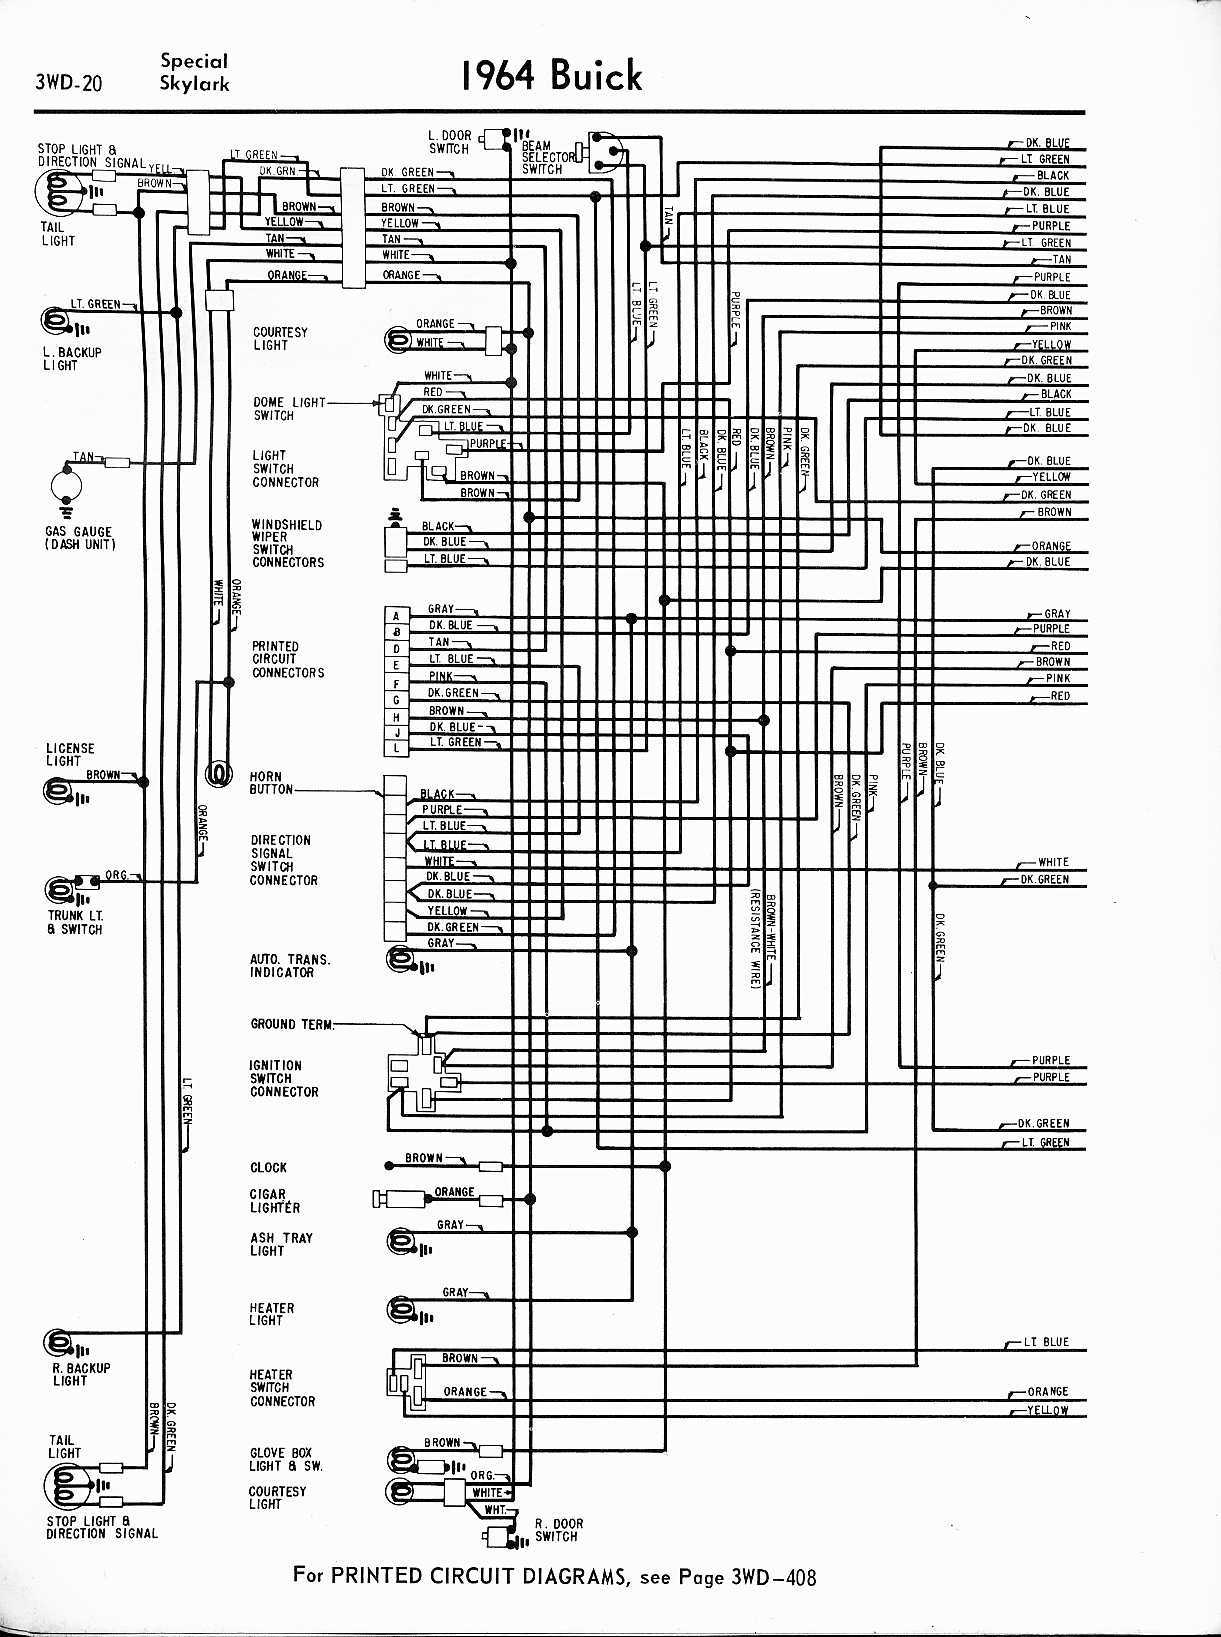 1957 Buick Wiring Diagram | Wiring Library 64 buick skylark wiring diagram 